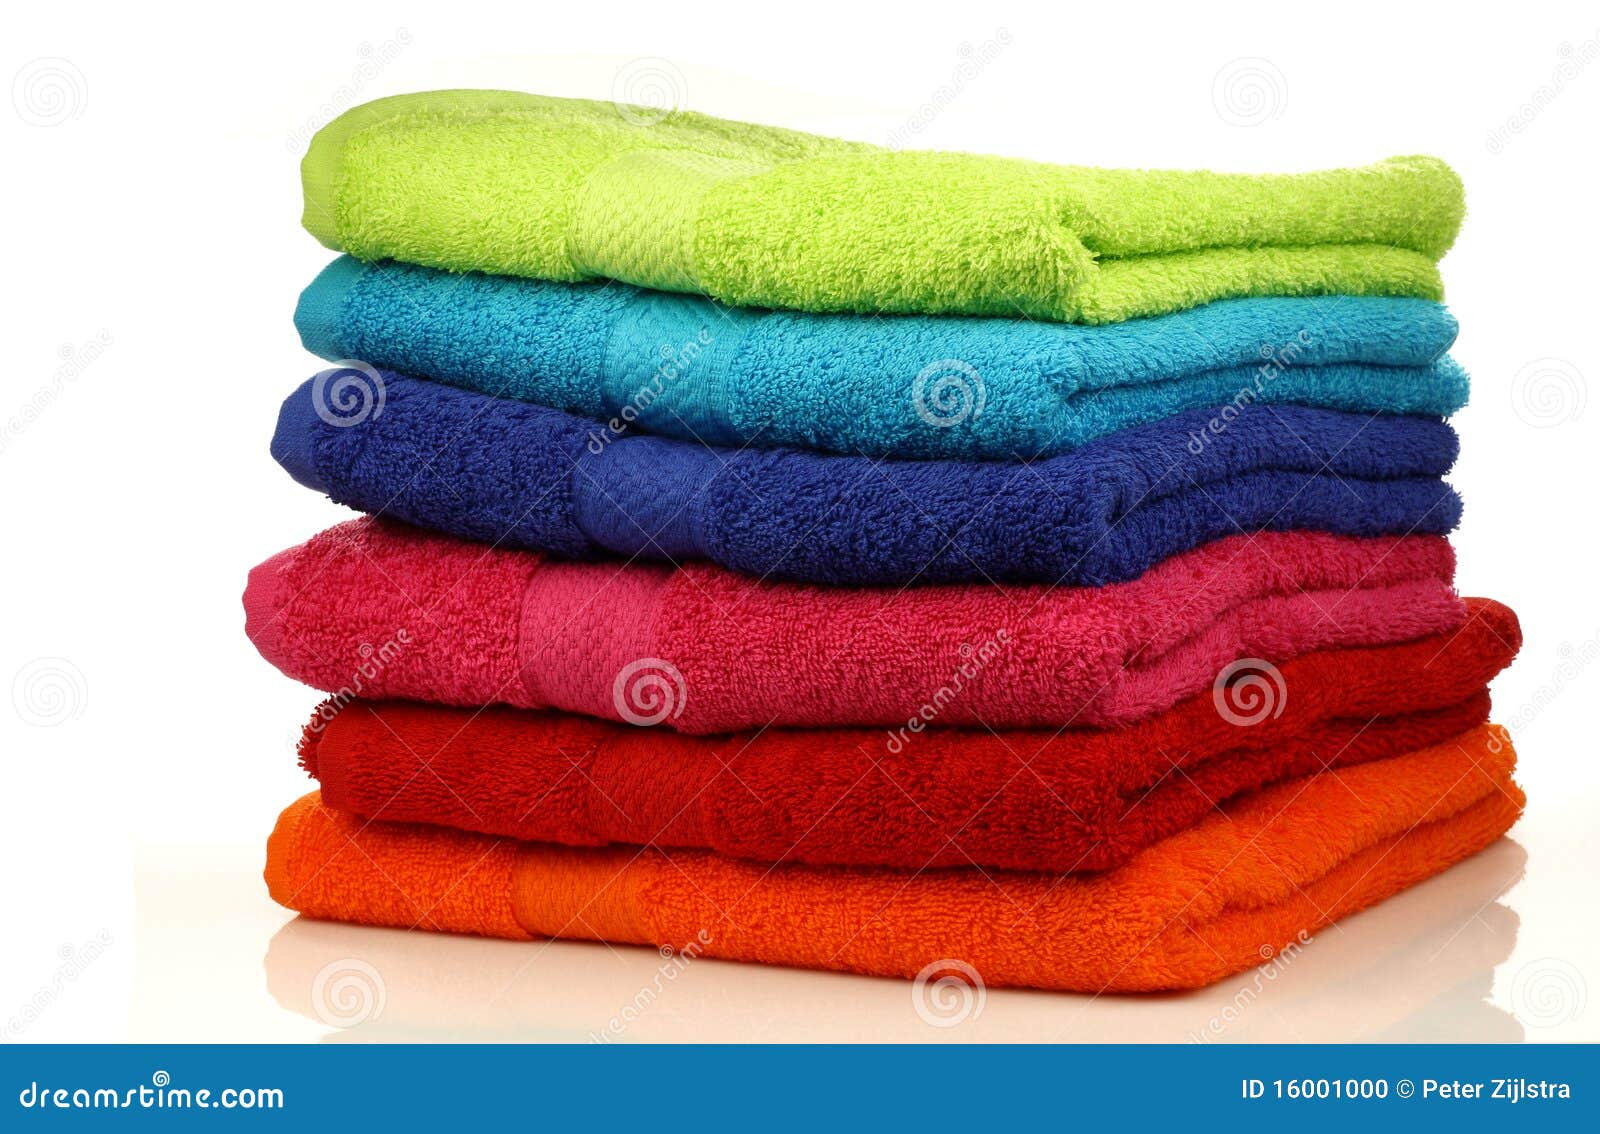 Длинные полотенца. Цветные полотенца. Полотенце/разноцветное. Махровые полотенца разноцветные. Разноцветные палатенцы.